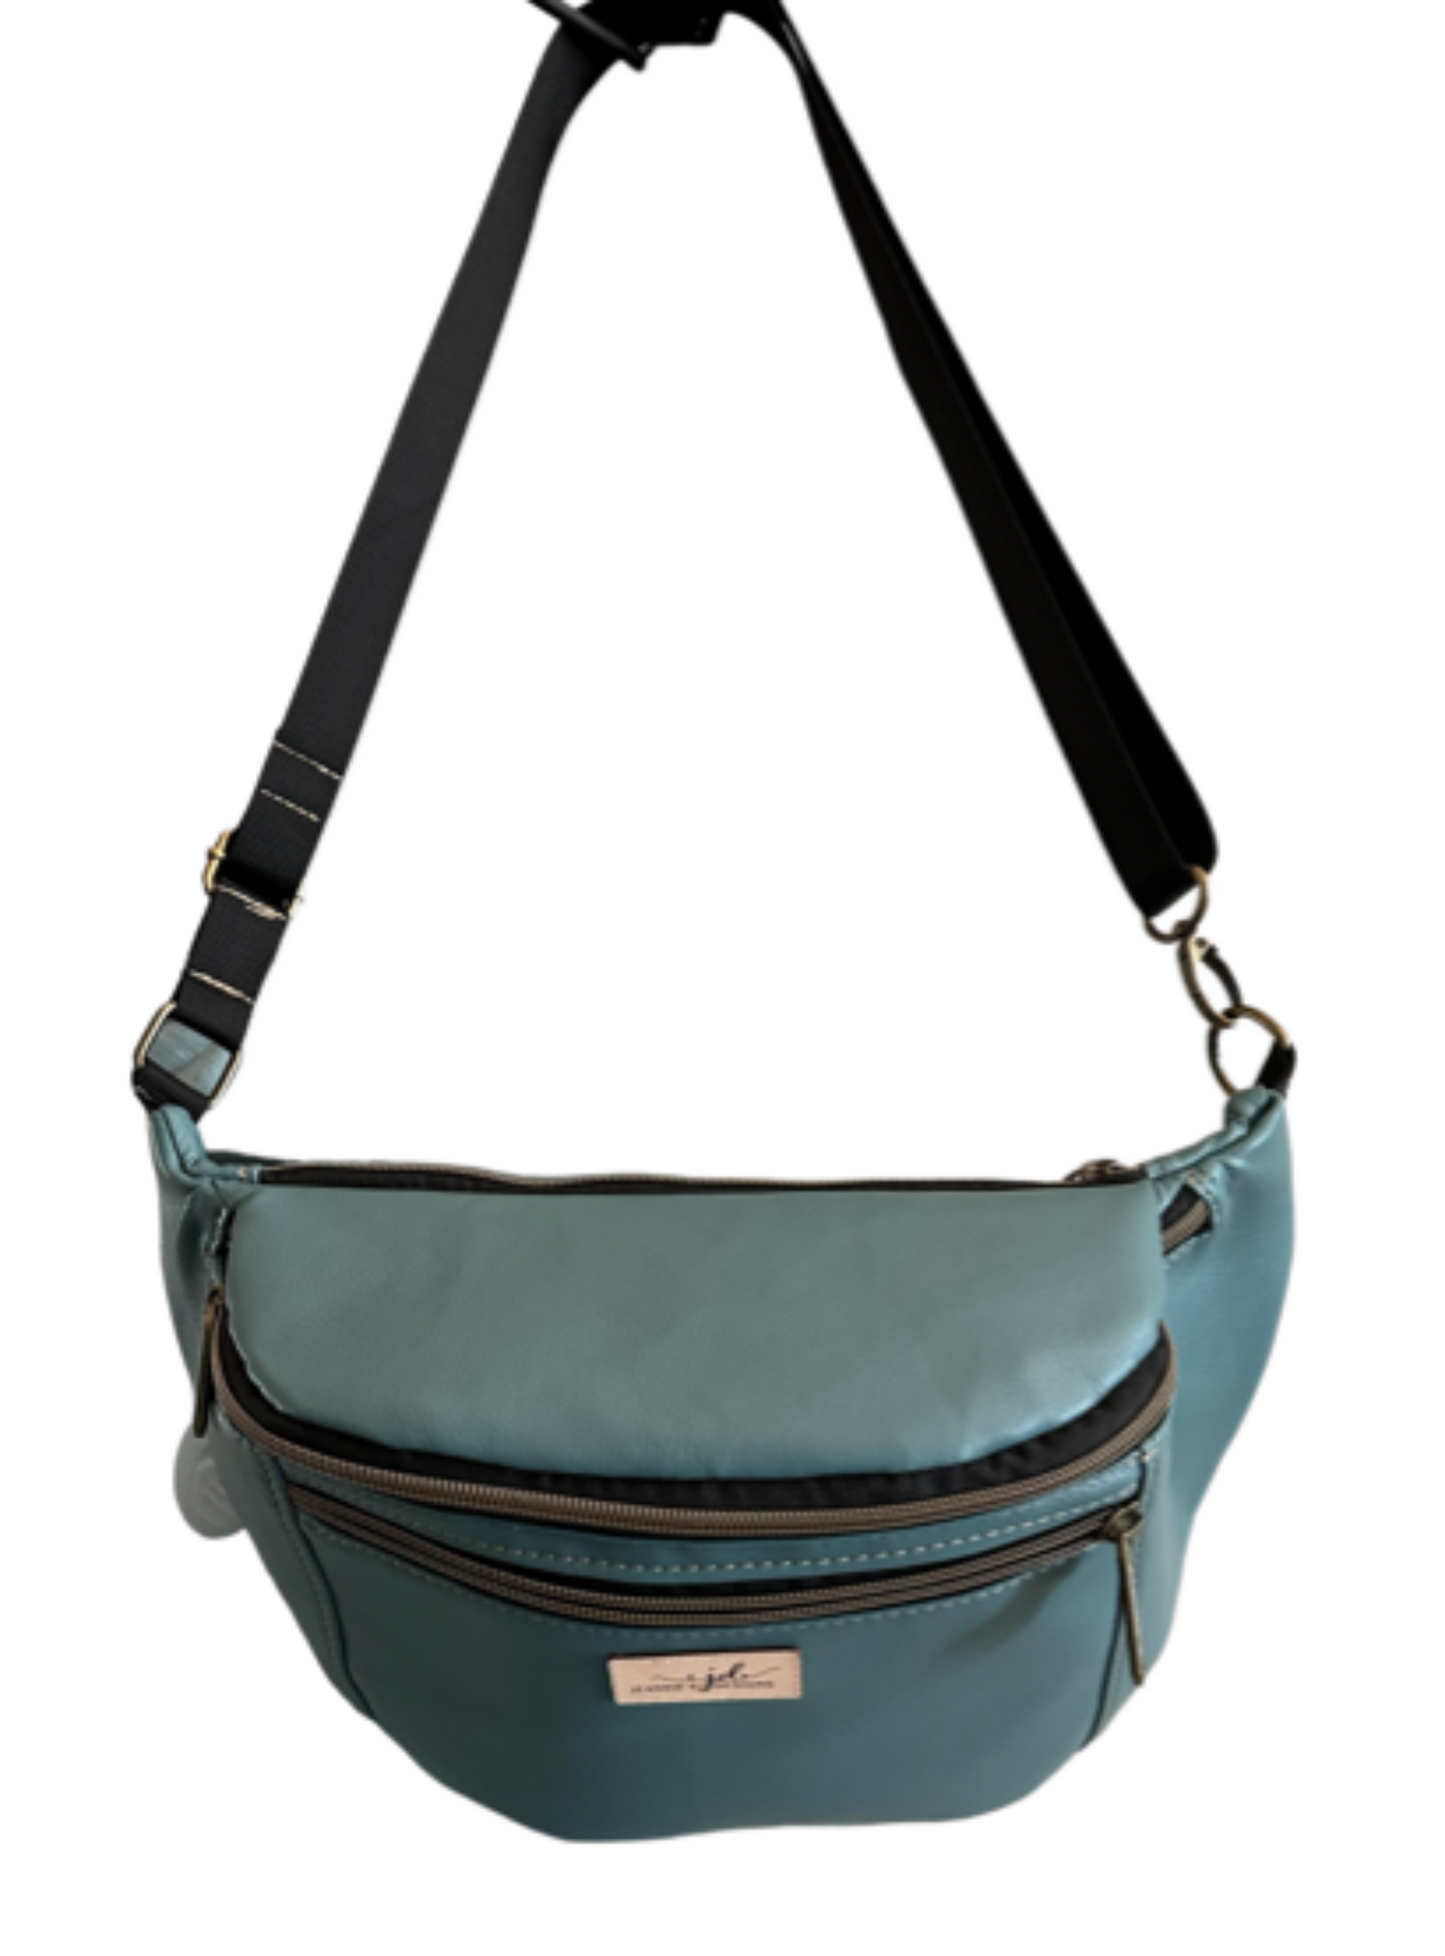 Fanny Pack Hip Bag Black Purple Blue-Green or Custom